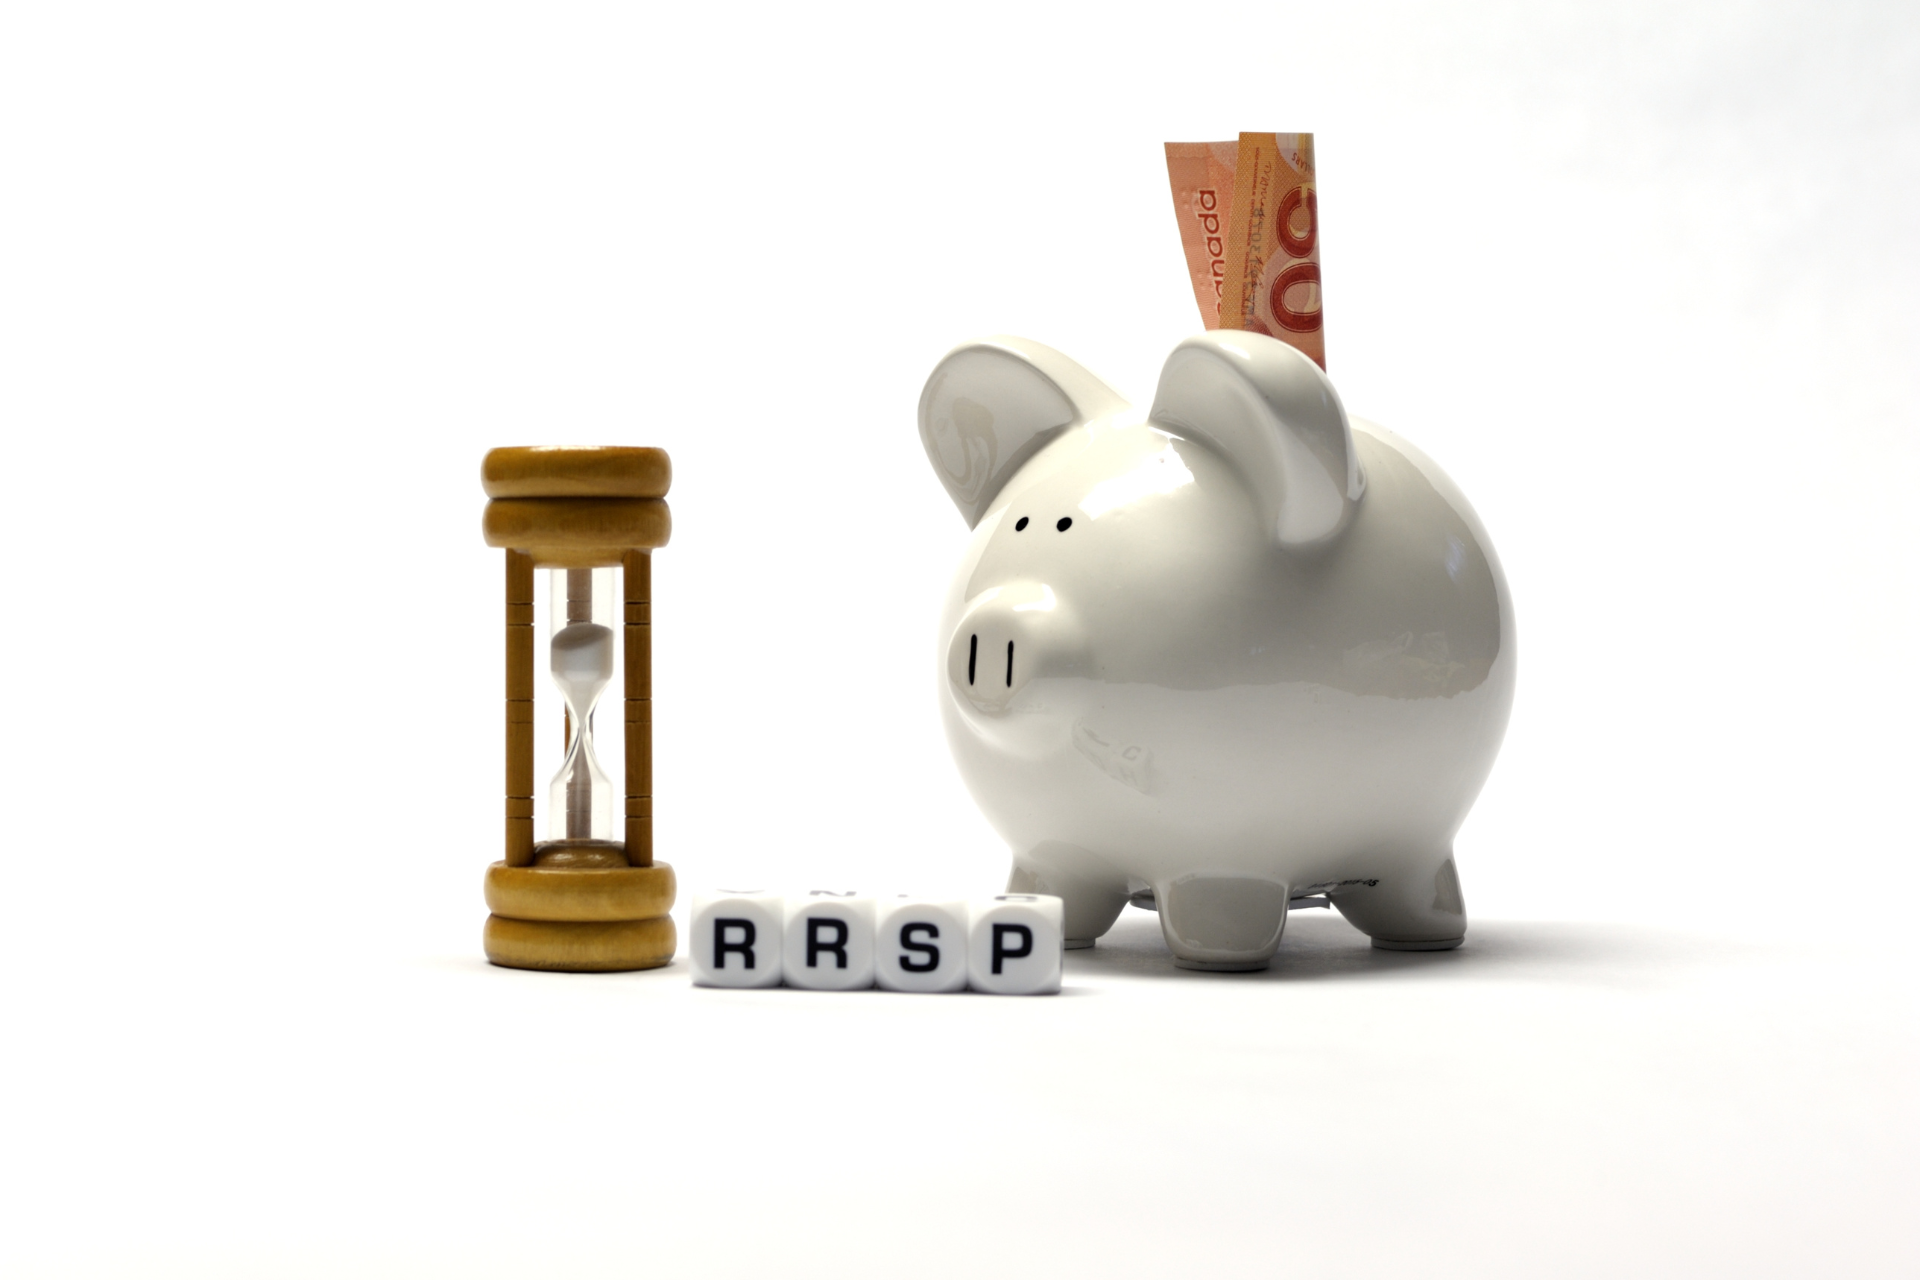 RRSP at retirement